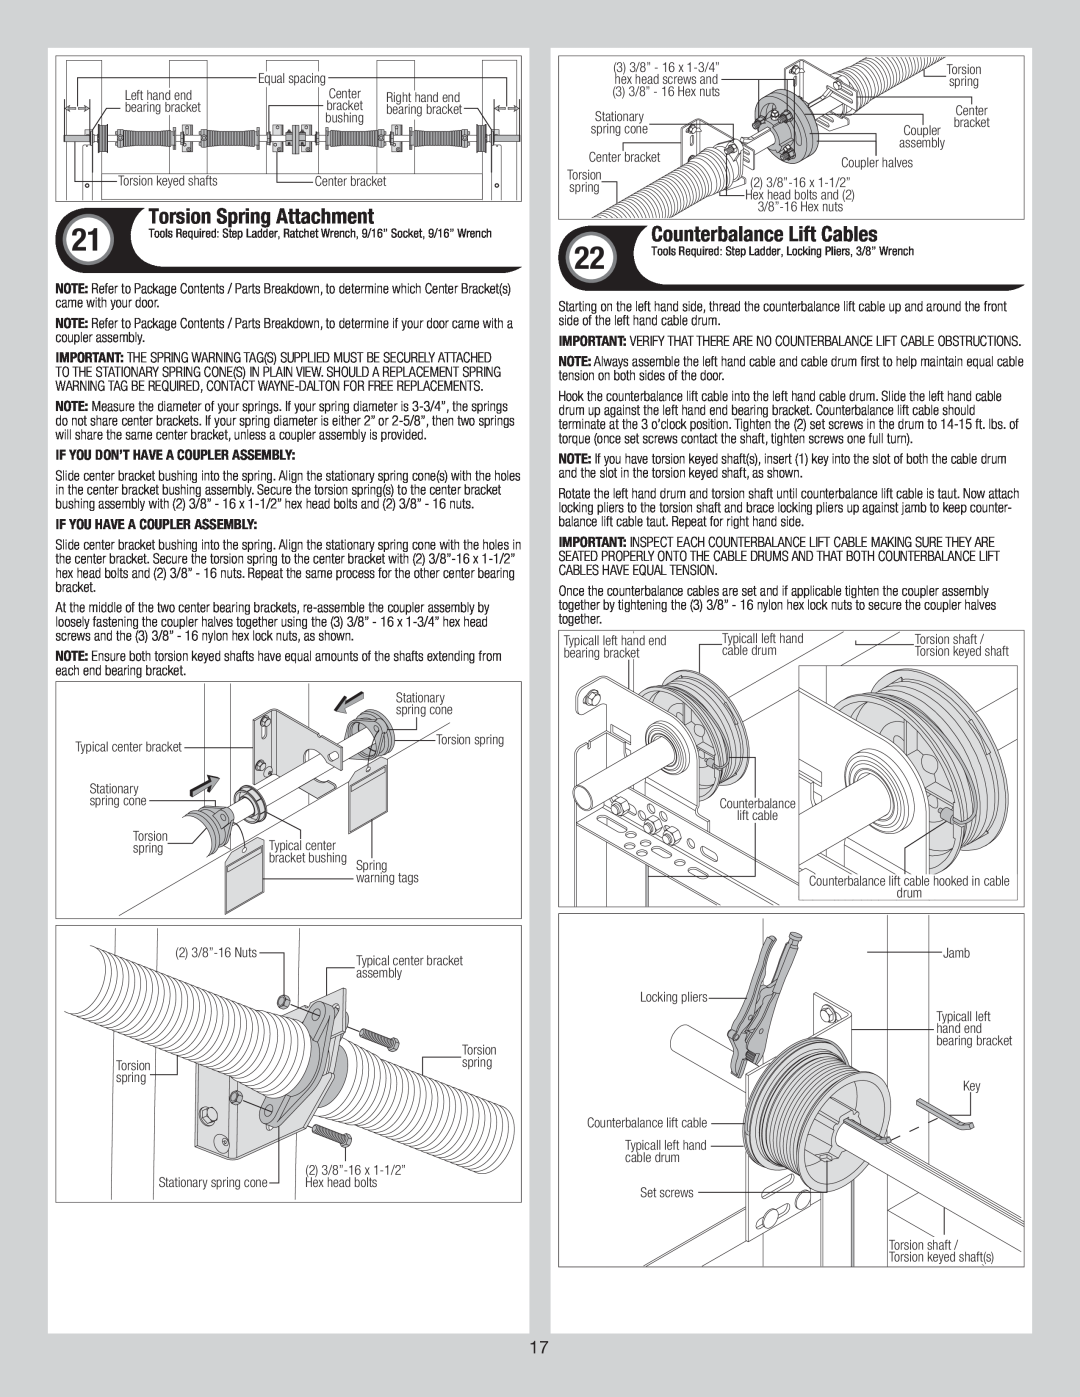 Wayne-Dalton 8300/8500 installation instructions Torsion Spring Attachment, Counterbalance Lift Cables 